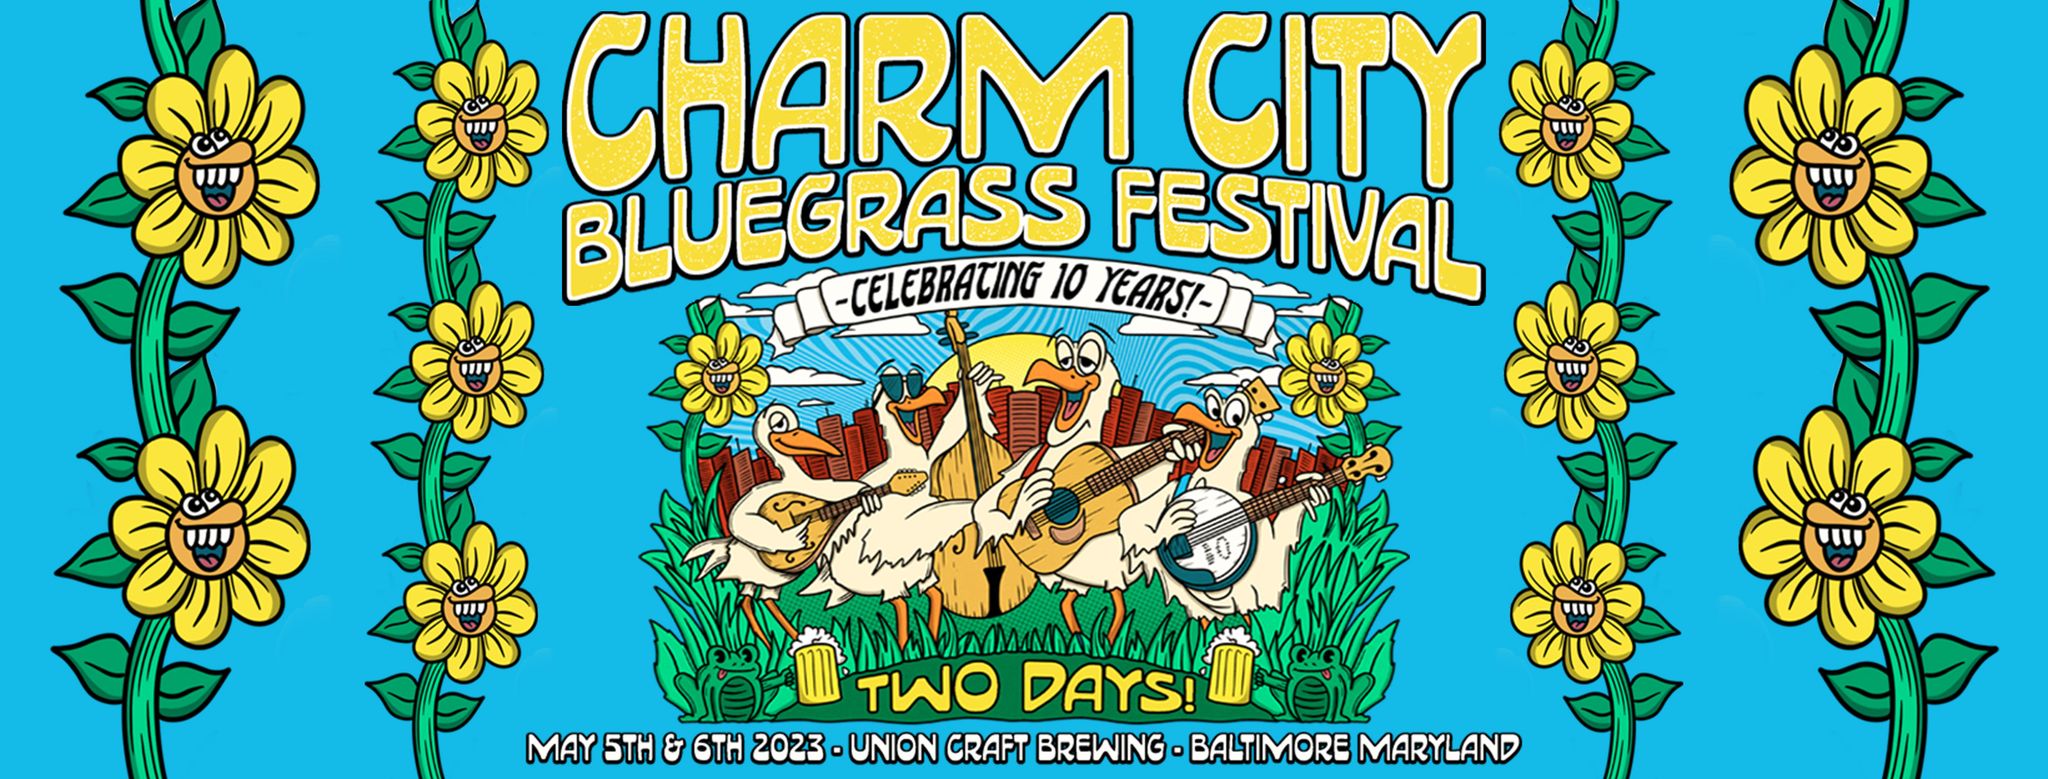 Charm City Bluegrass Announces Their 2023 Lineup!